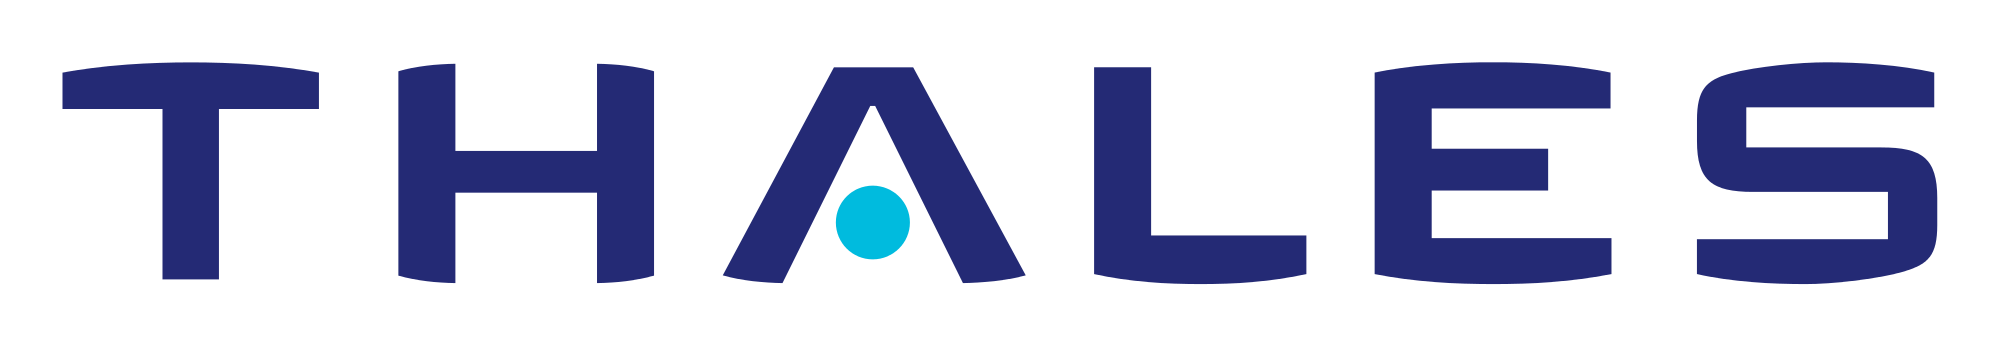 Thales Logo - GLOBAL ENCRYPTION TRENDS STUDY